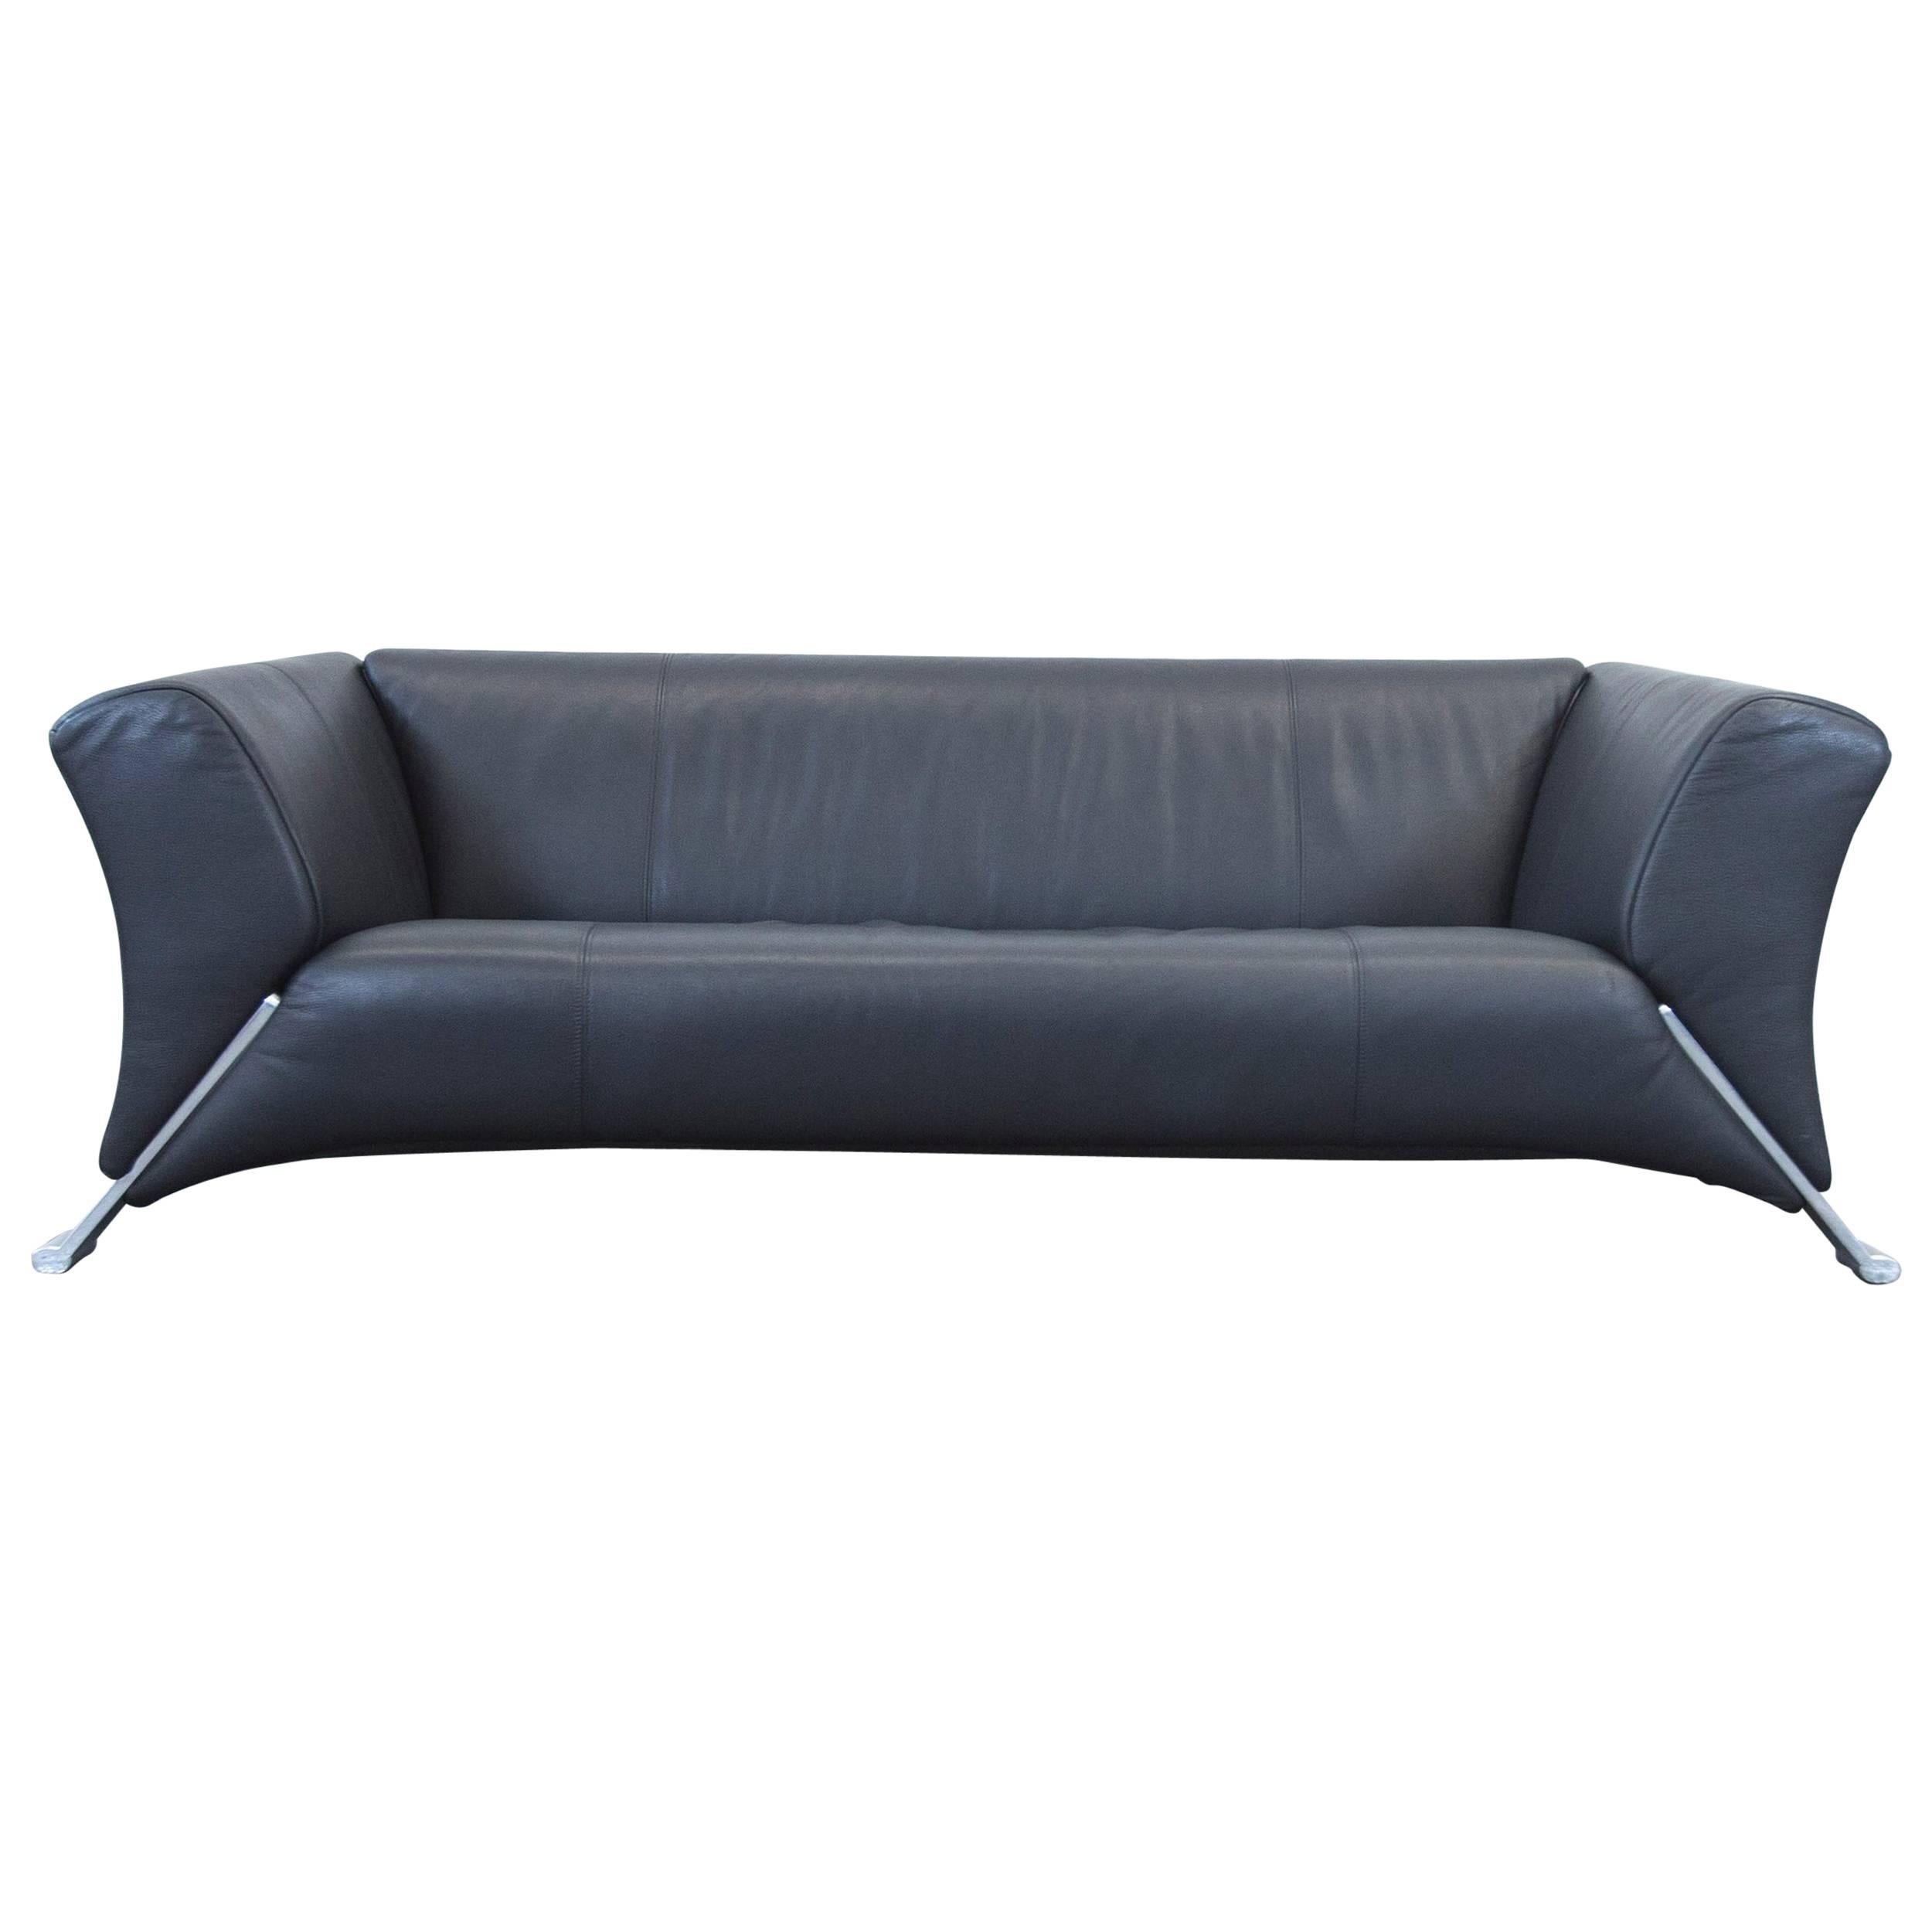 Rolf Benz 322 Designer Leather Sofa Black Three-Seat Couch Modern